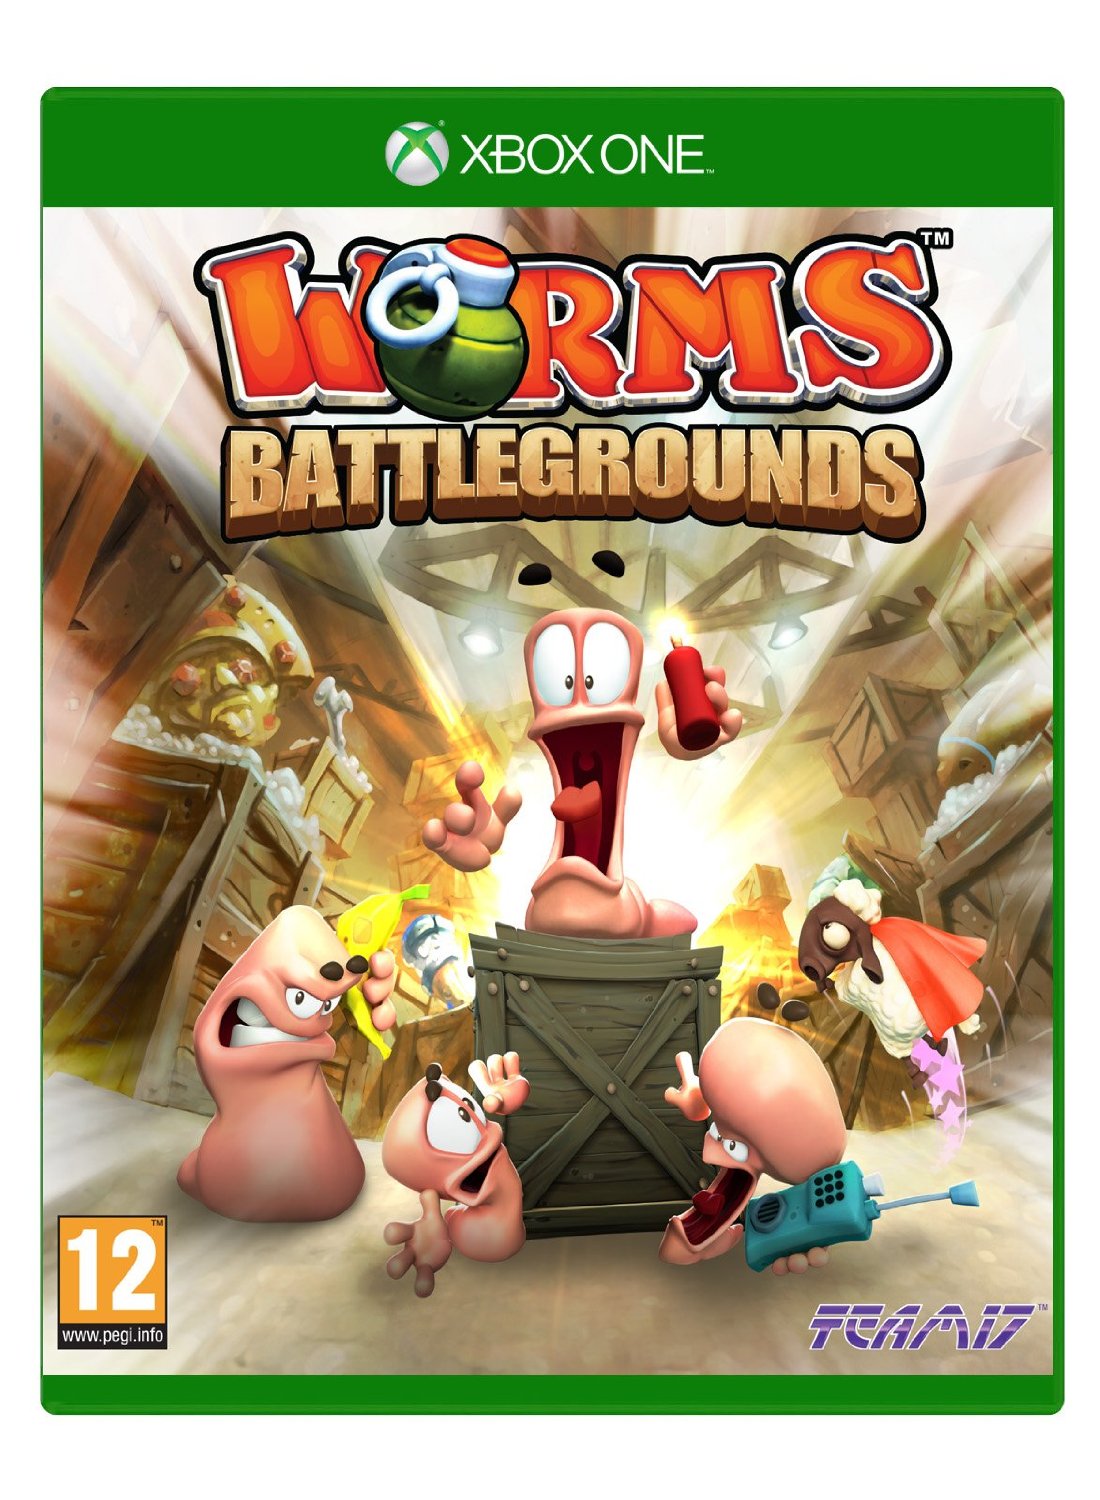 Worms Battlegrounds (Xbox One)